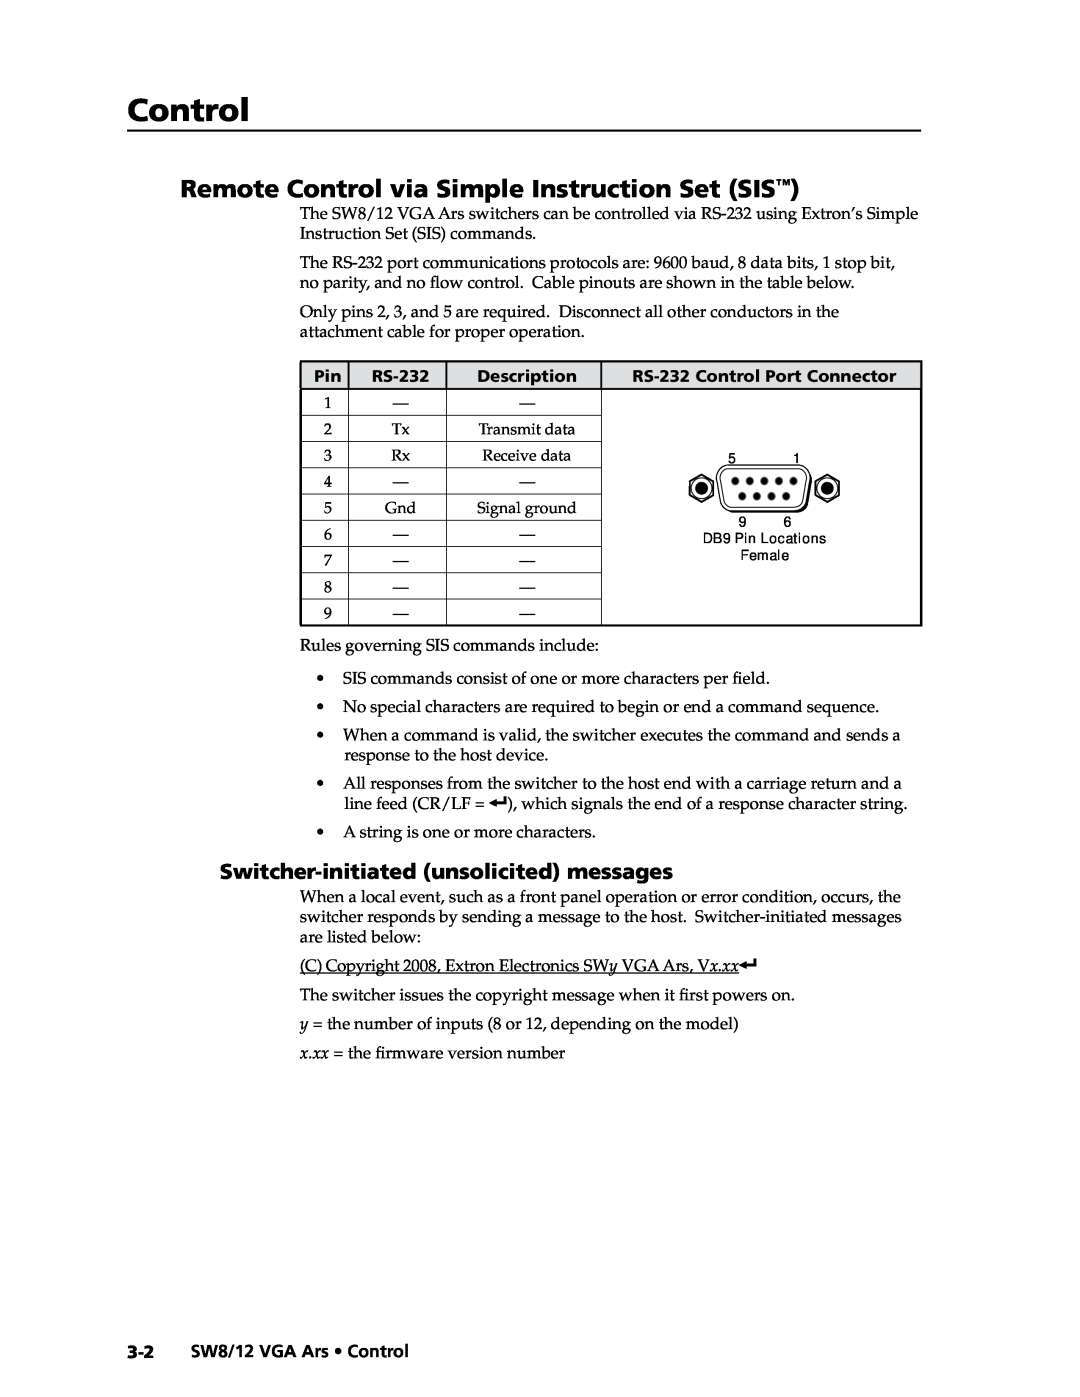 Extron electronic SW8/12 VGA, SW12 VGA ARS manual Remote Control via Simple Instruction Set SIS\⤀ 